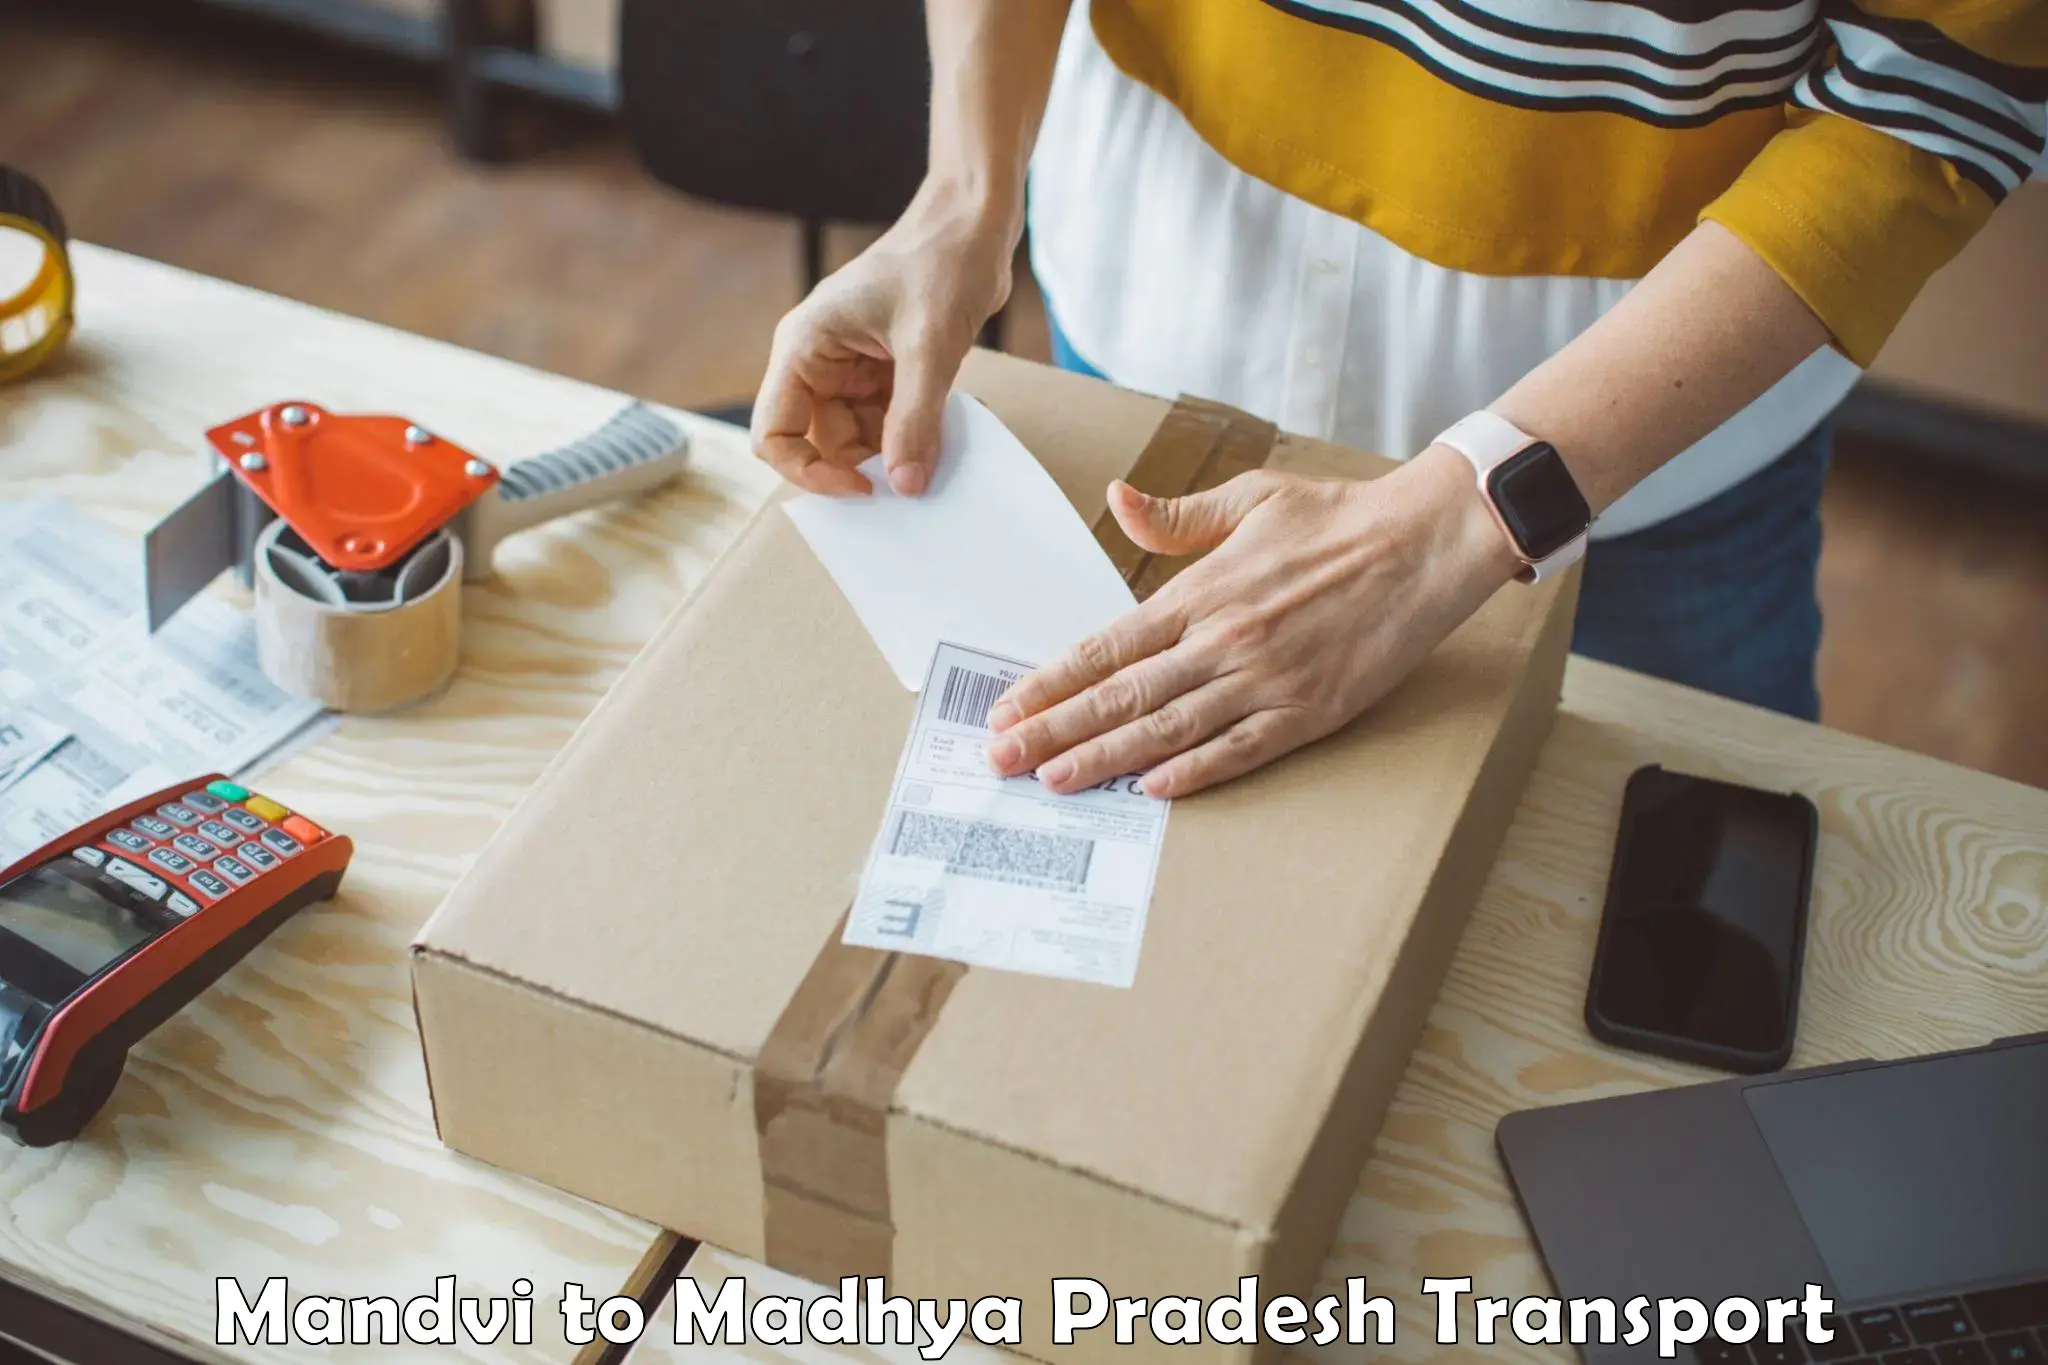 Shipping partner Mandvi to Indore